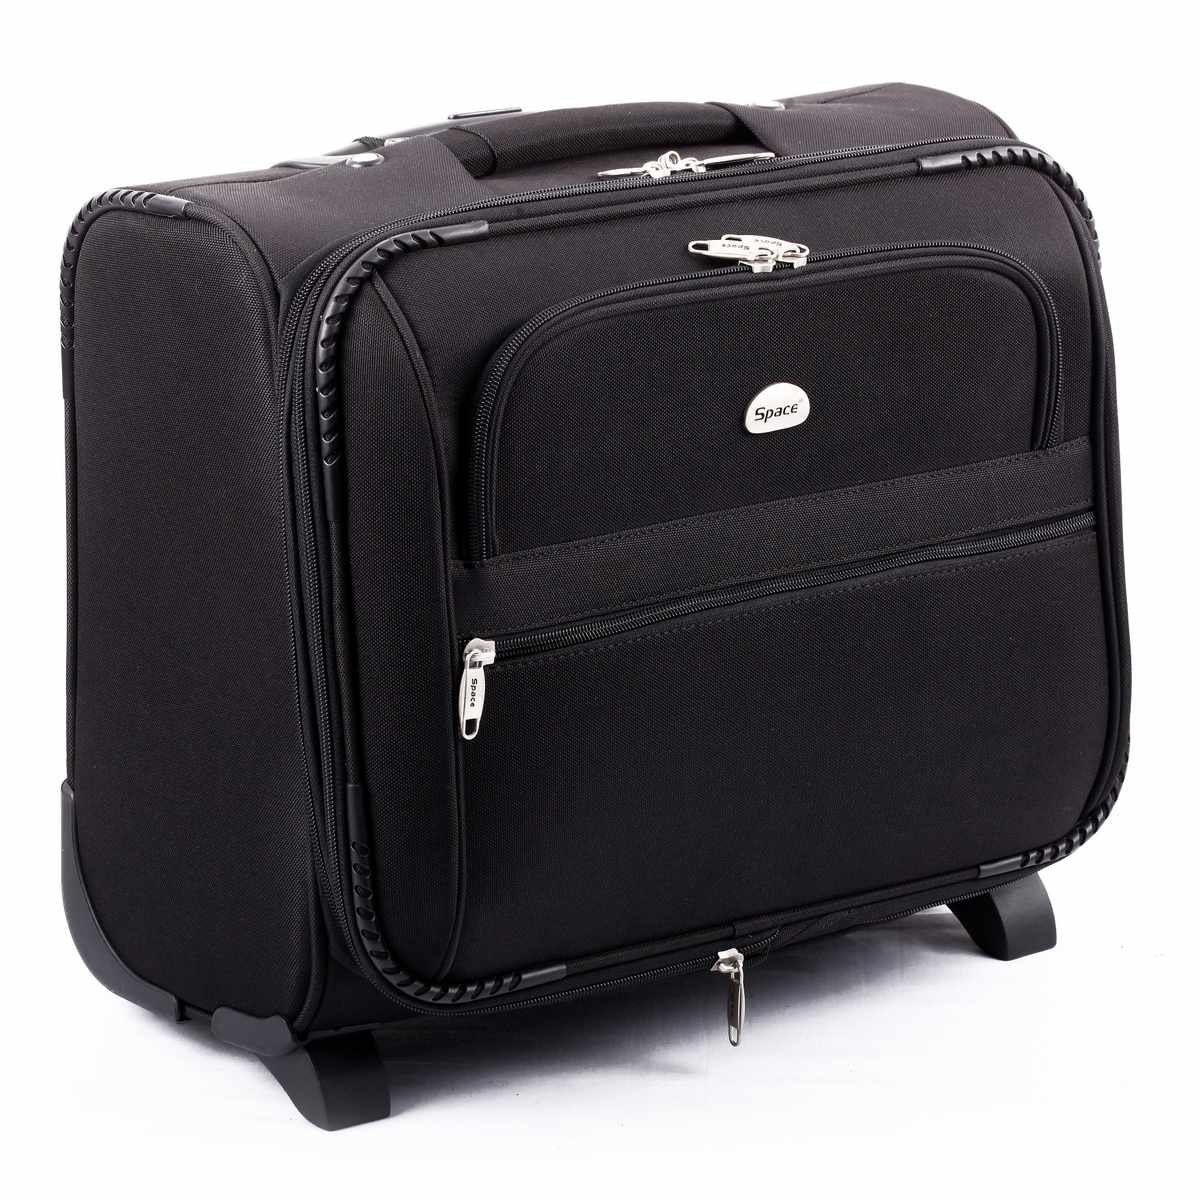 Maxi-Cosi ultra-compact travel bag – Pushchair bag